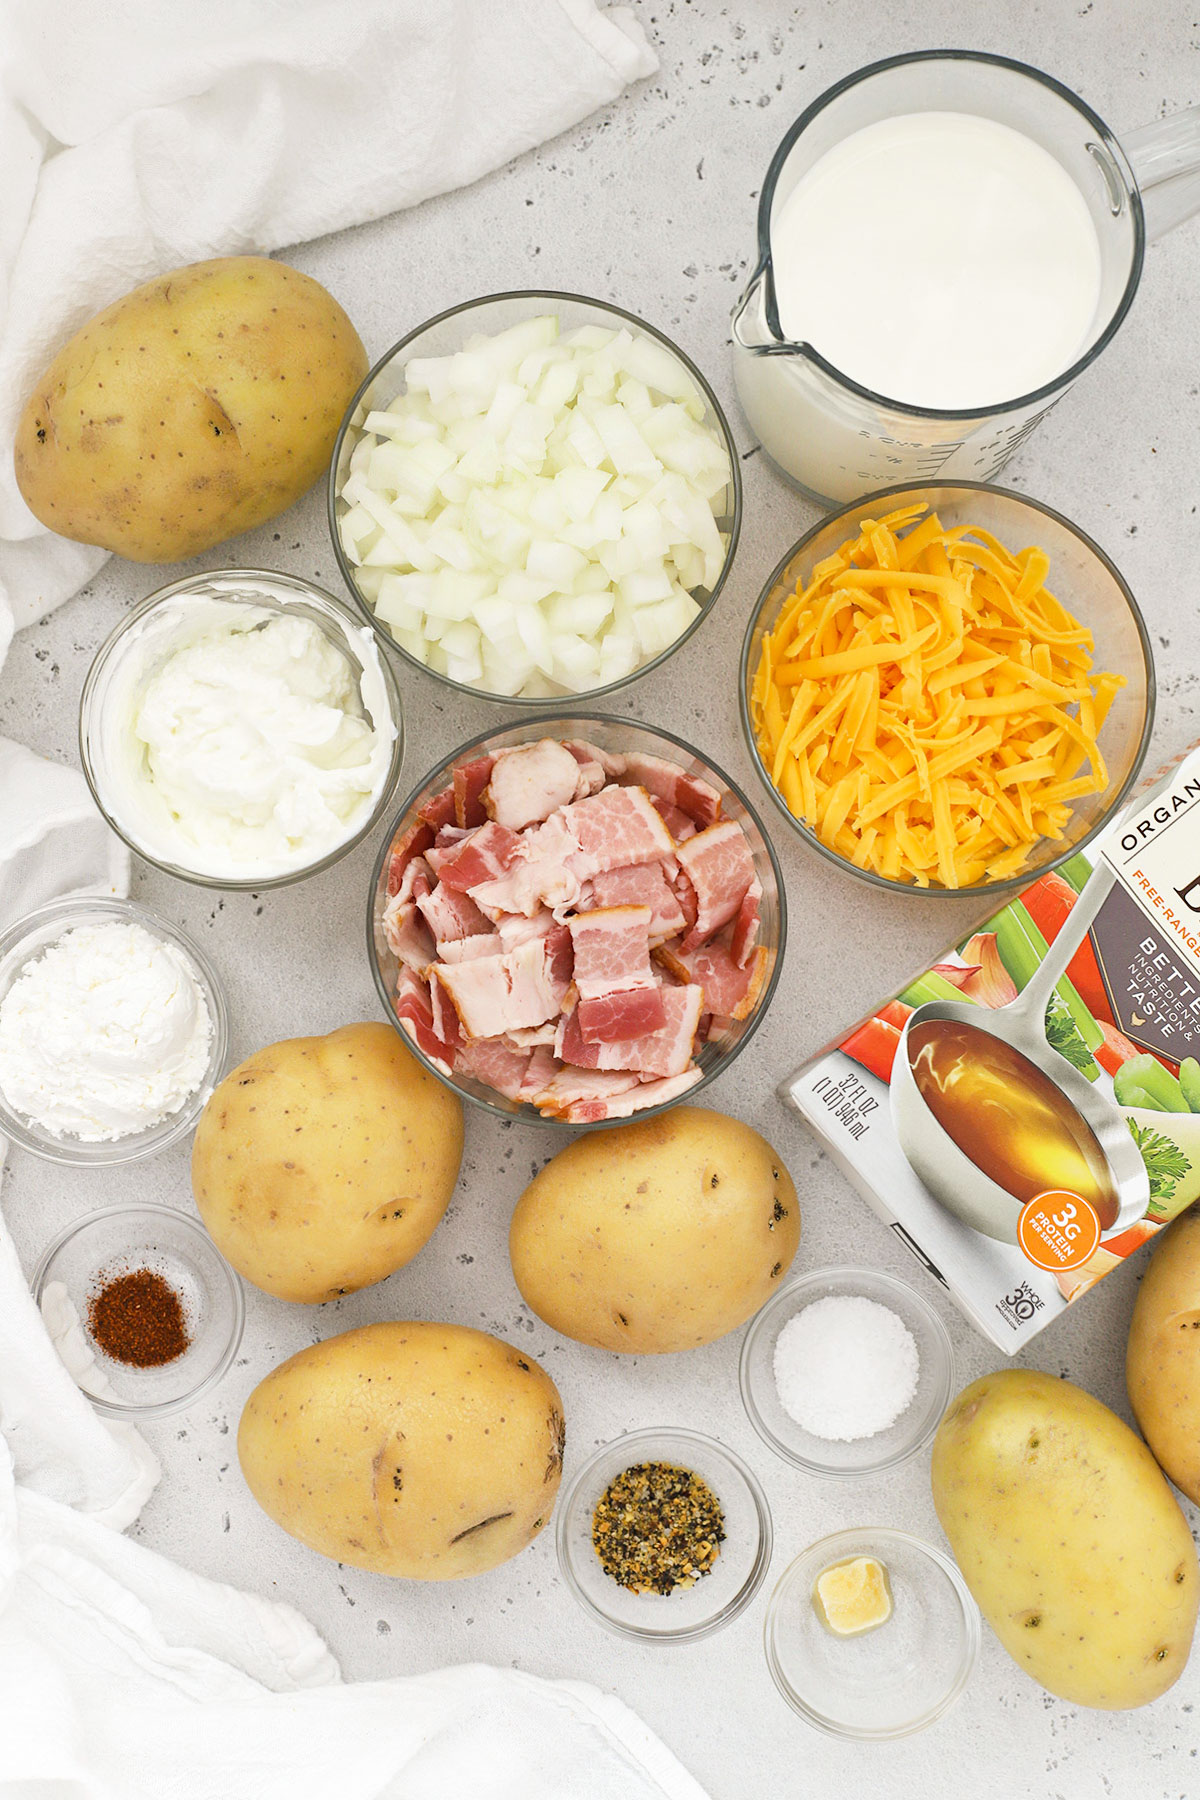 Ingredients for gluten-free potato soup